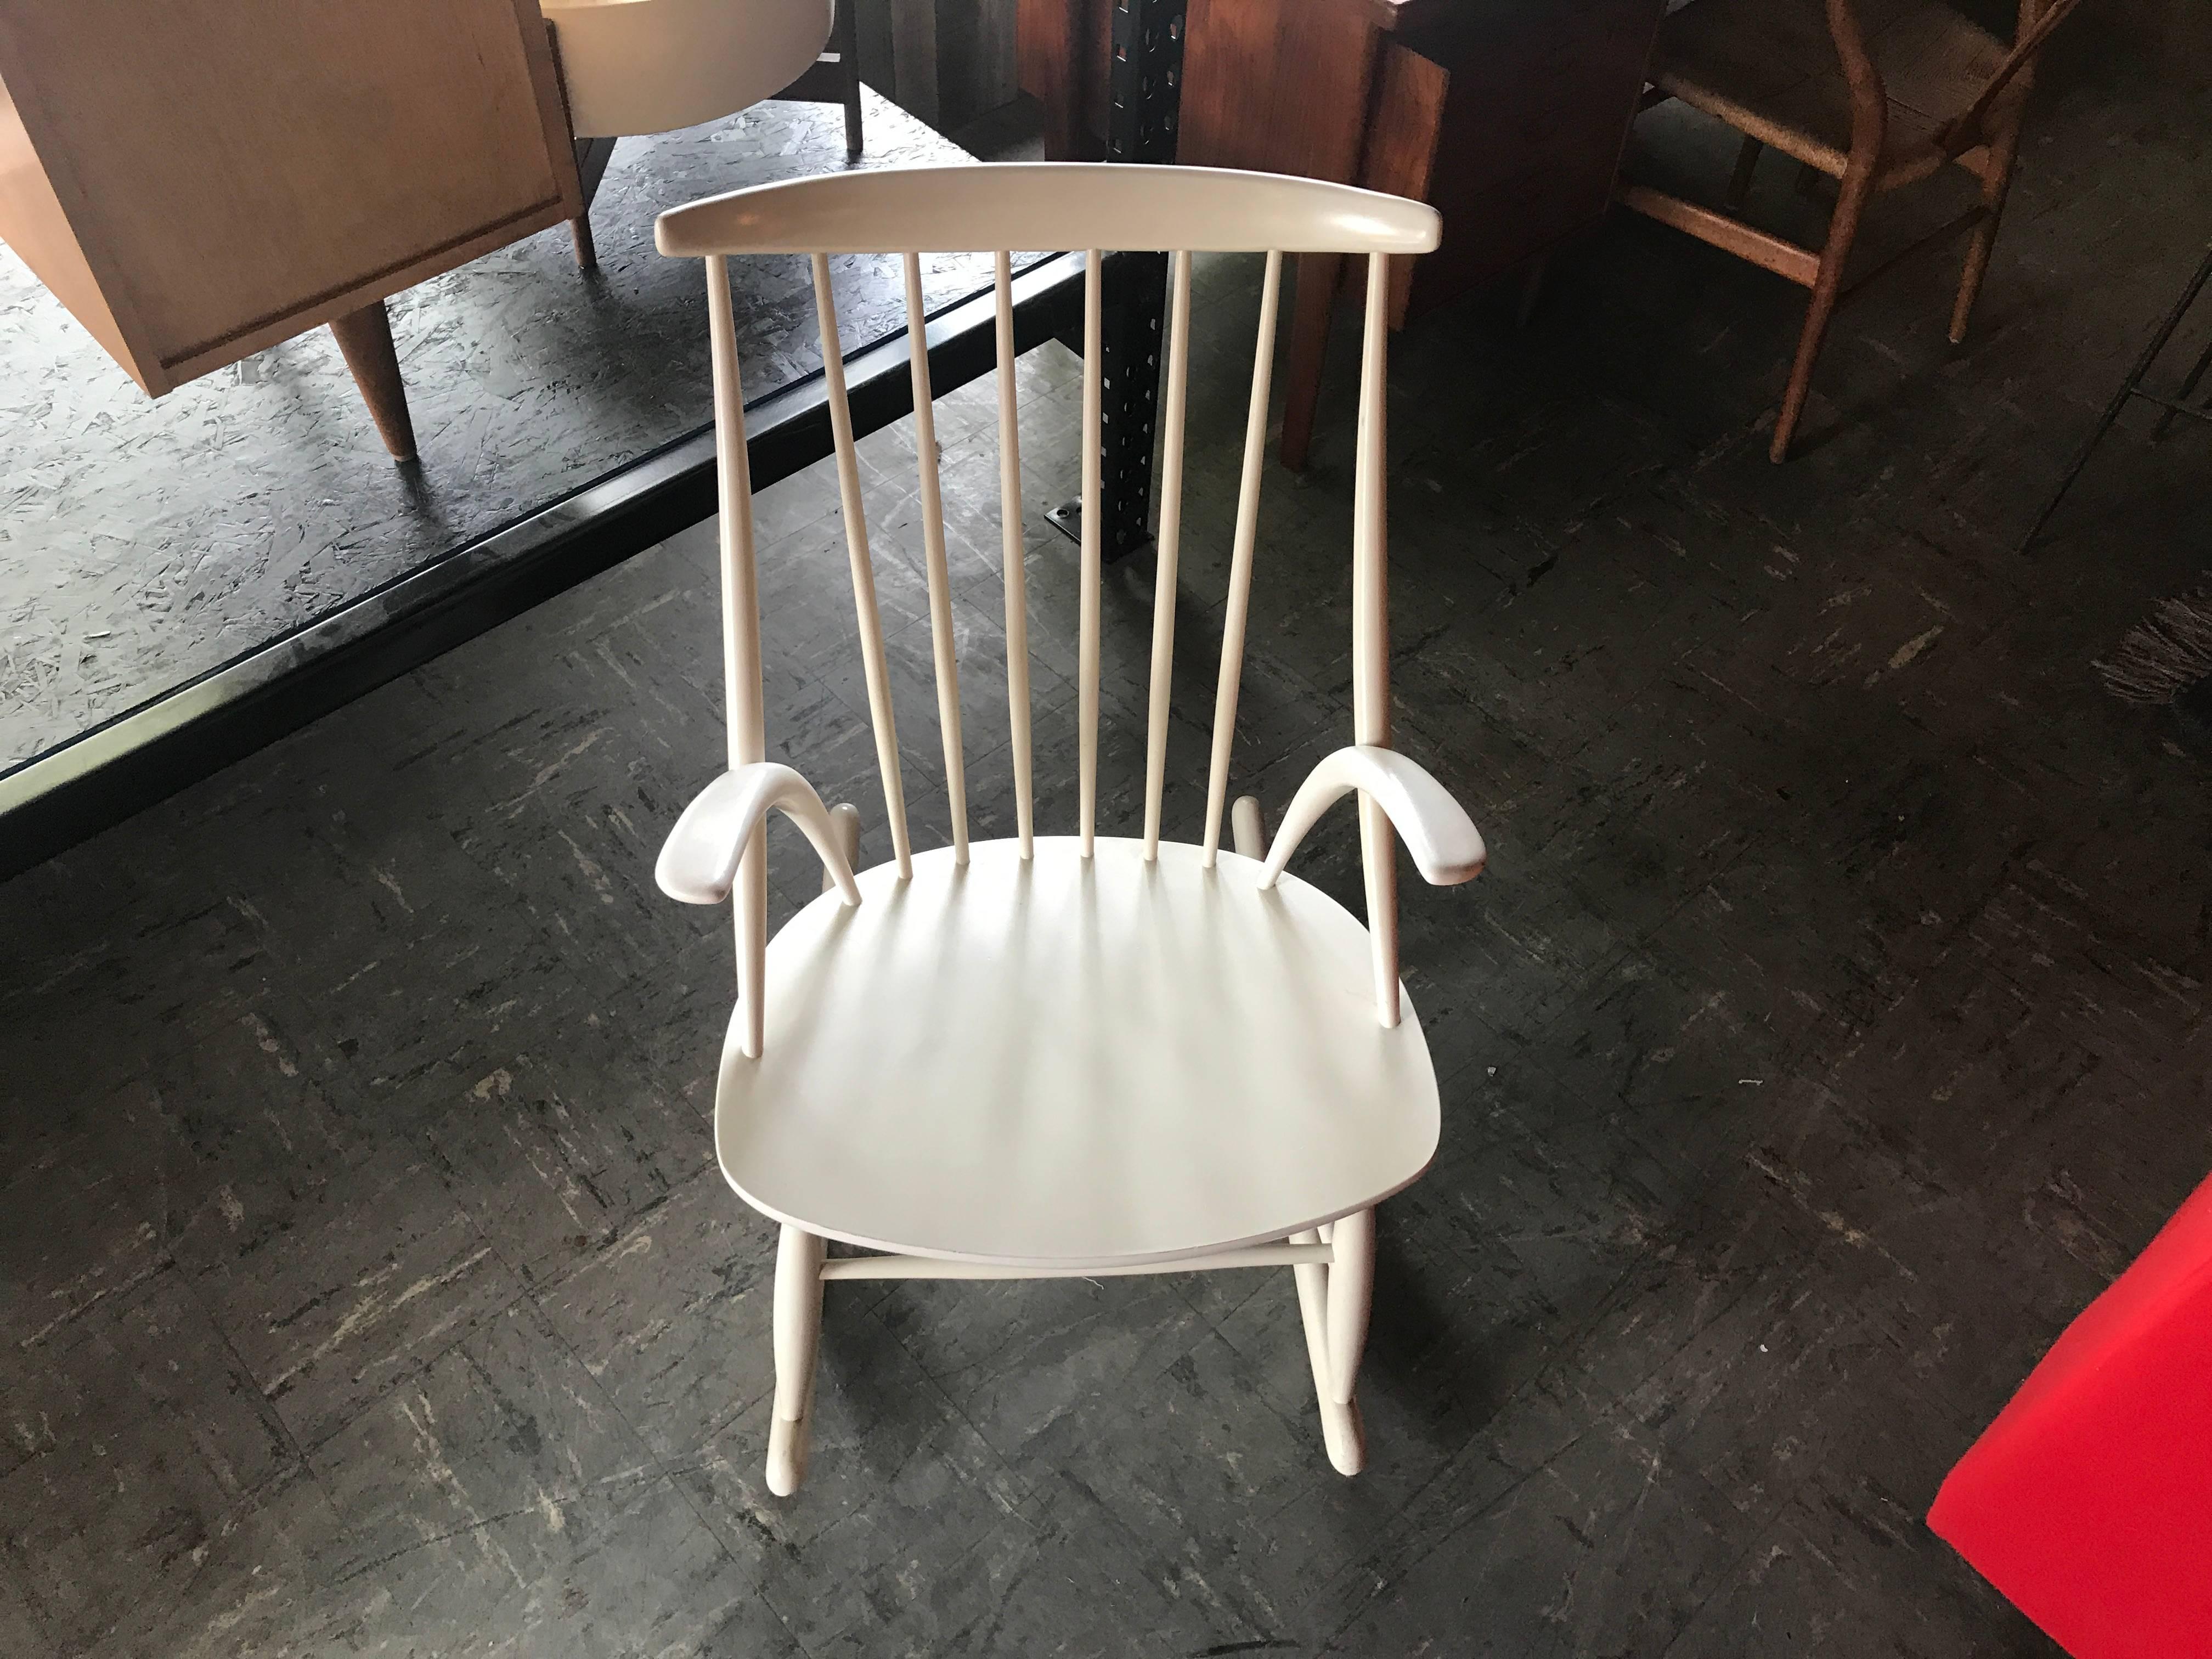 Illum Wikkelso white rocking chair rocker in great vintage condition.